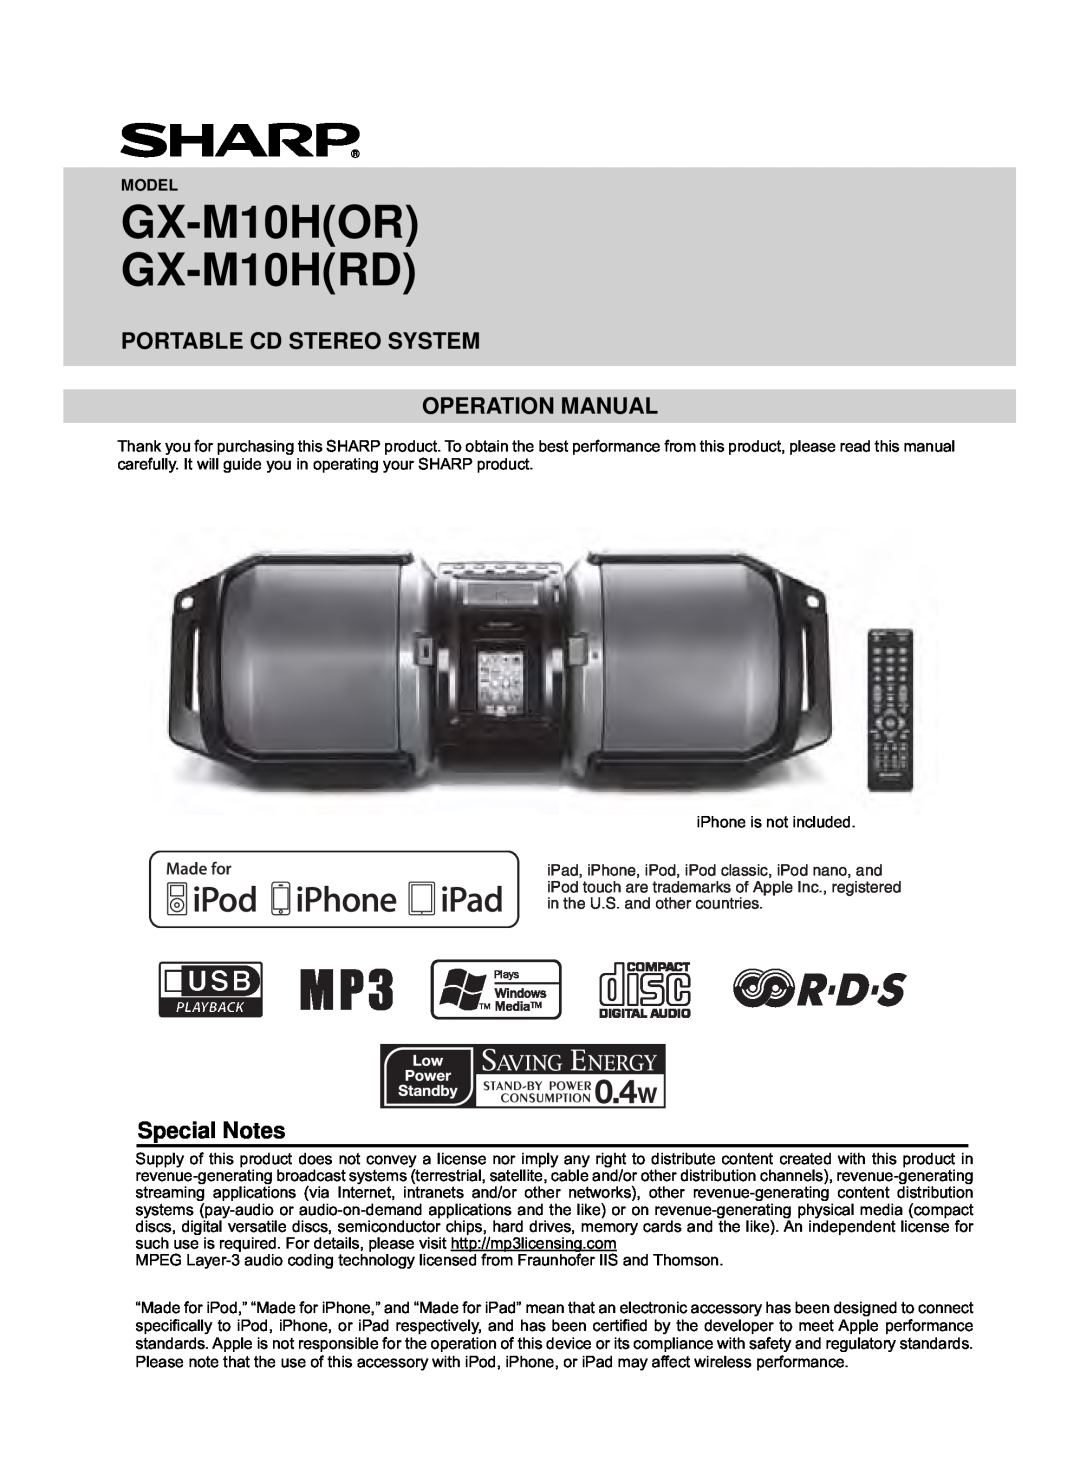 Sharp GX-M10H(RD), GX-M10H(OR) operation manual Special Notes, GX-M10HOR GX-M10HRD 